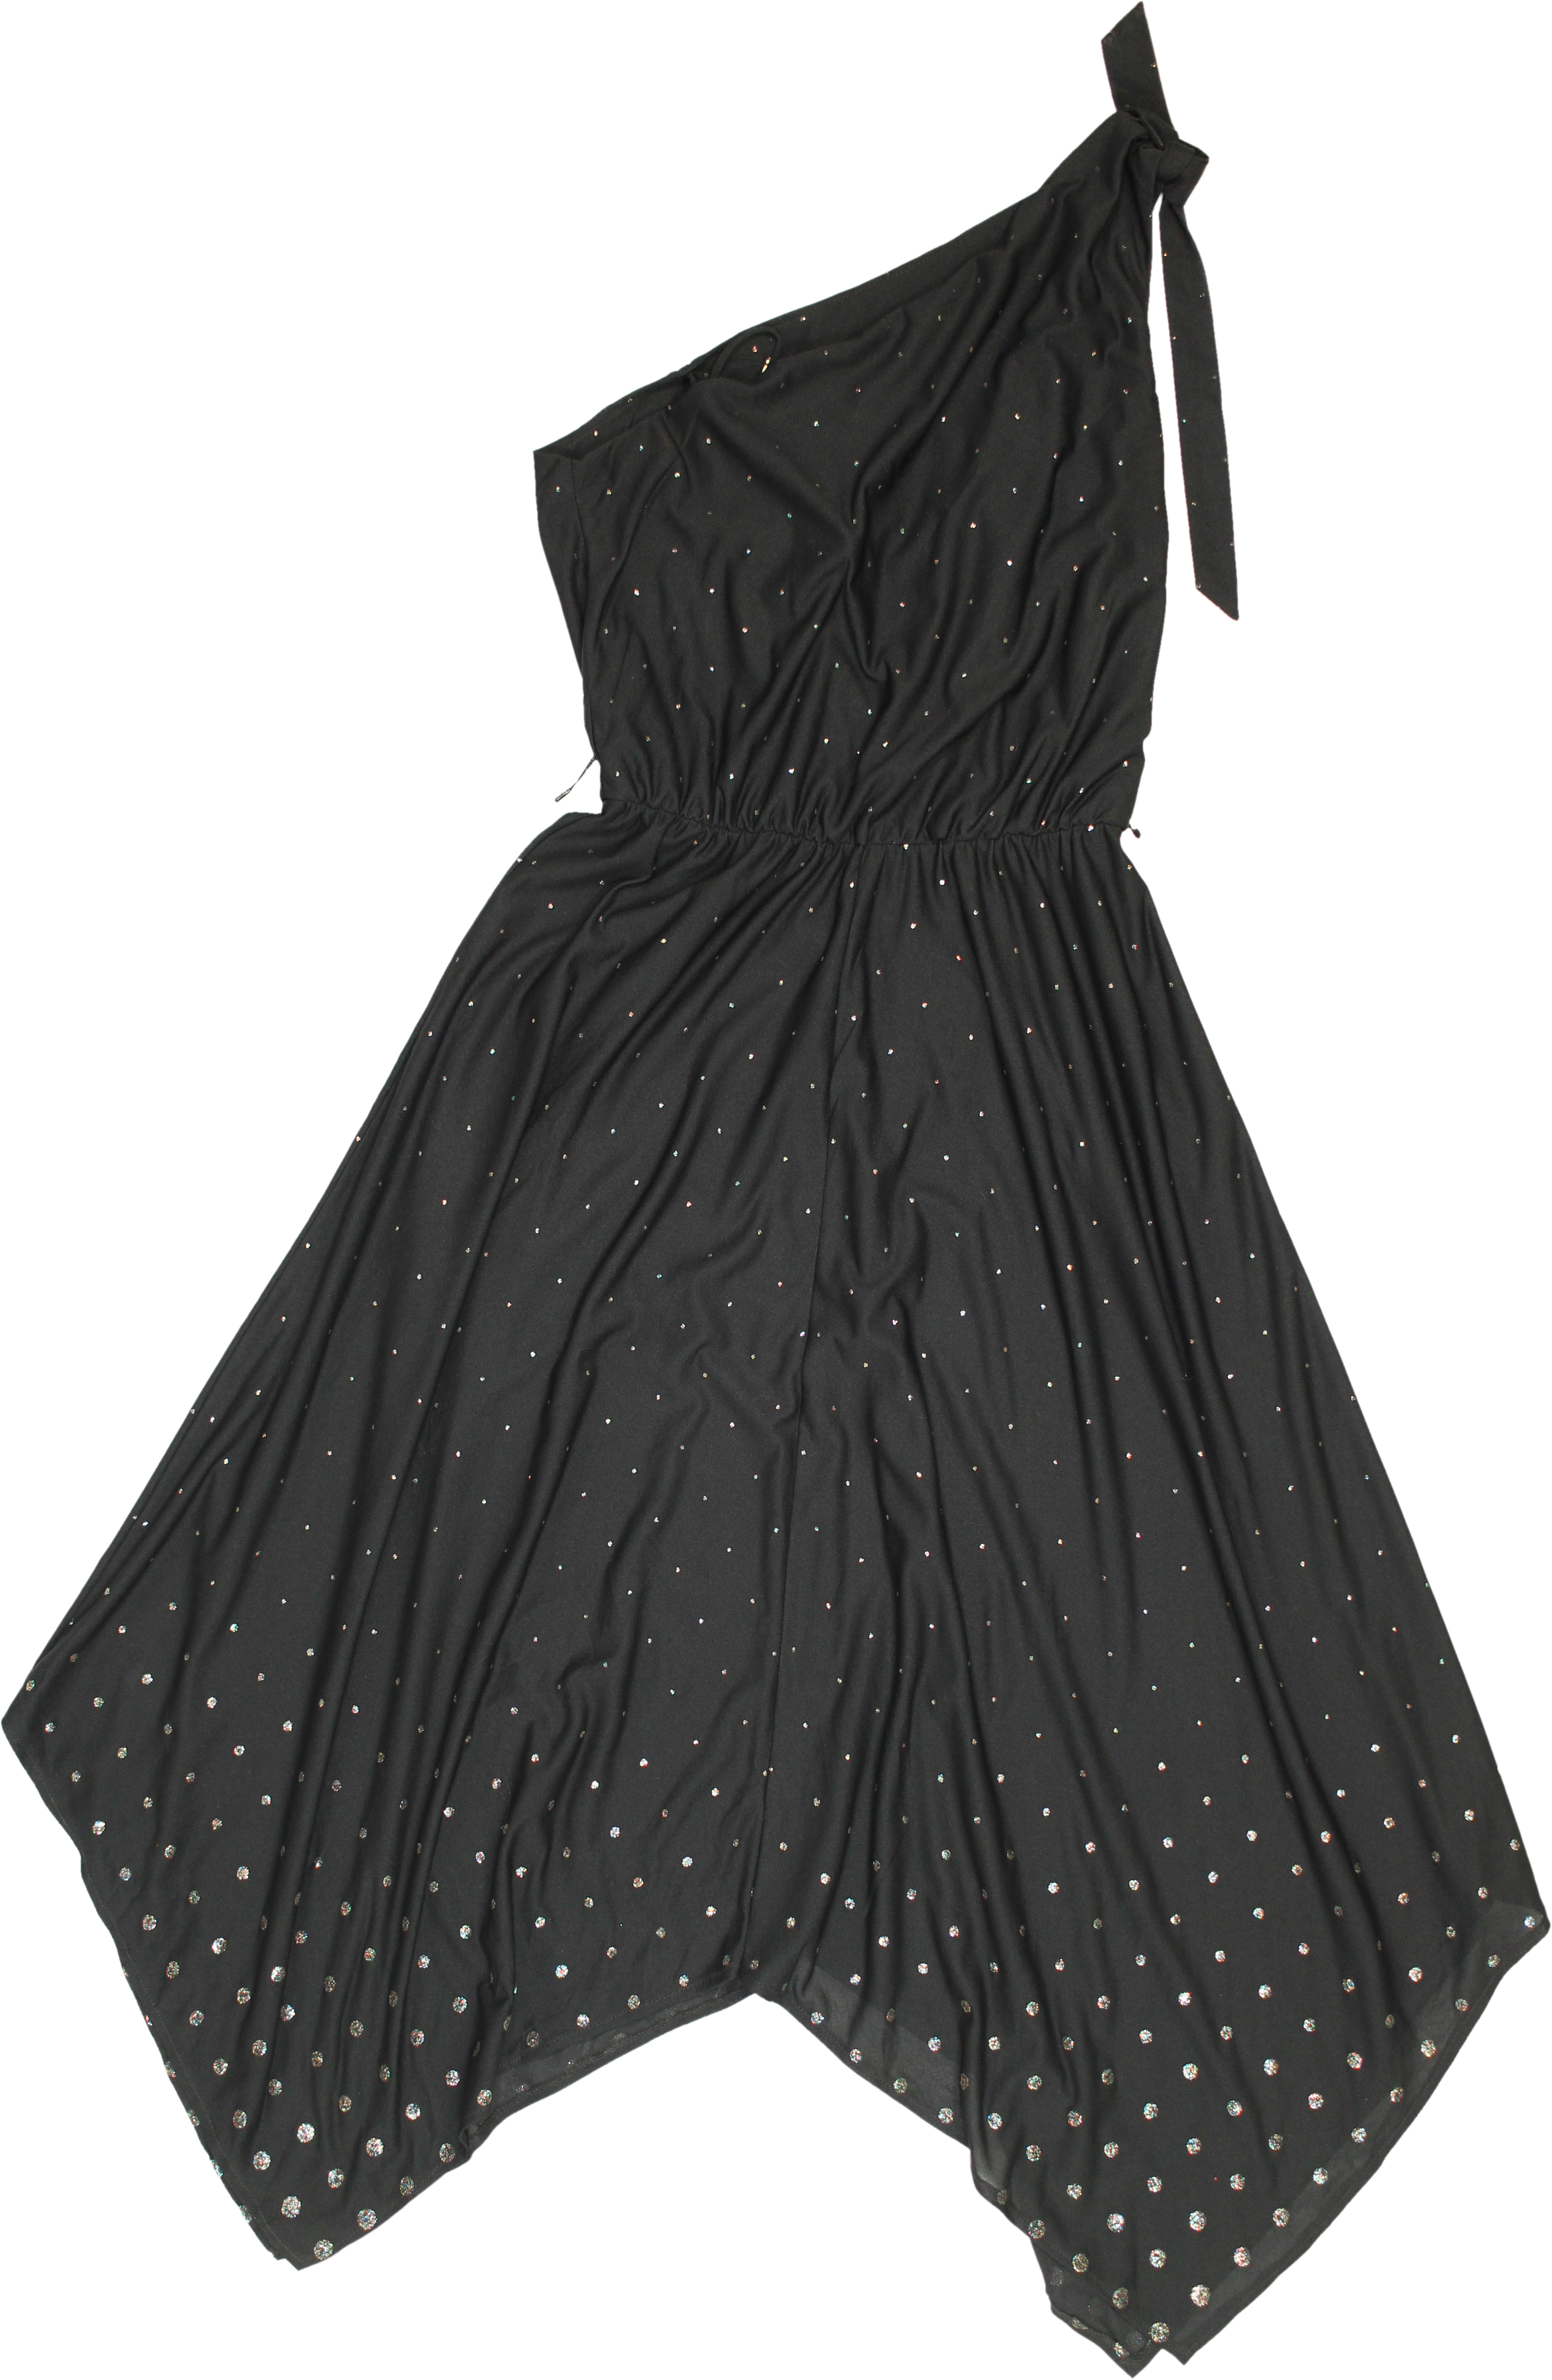 Kressandra - 80s Dress- ThriftTale.com - Vintage and second handclothing